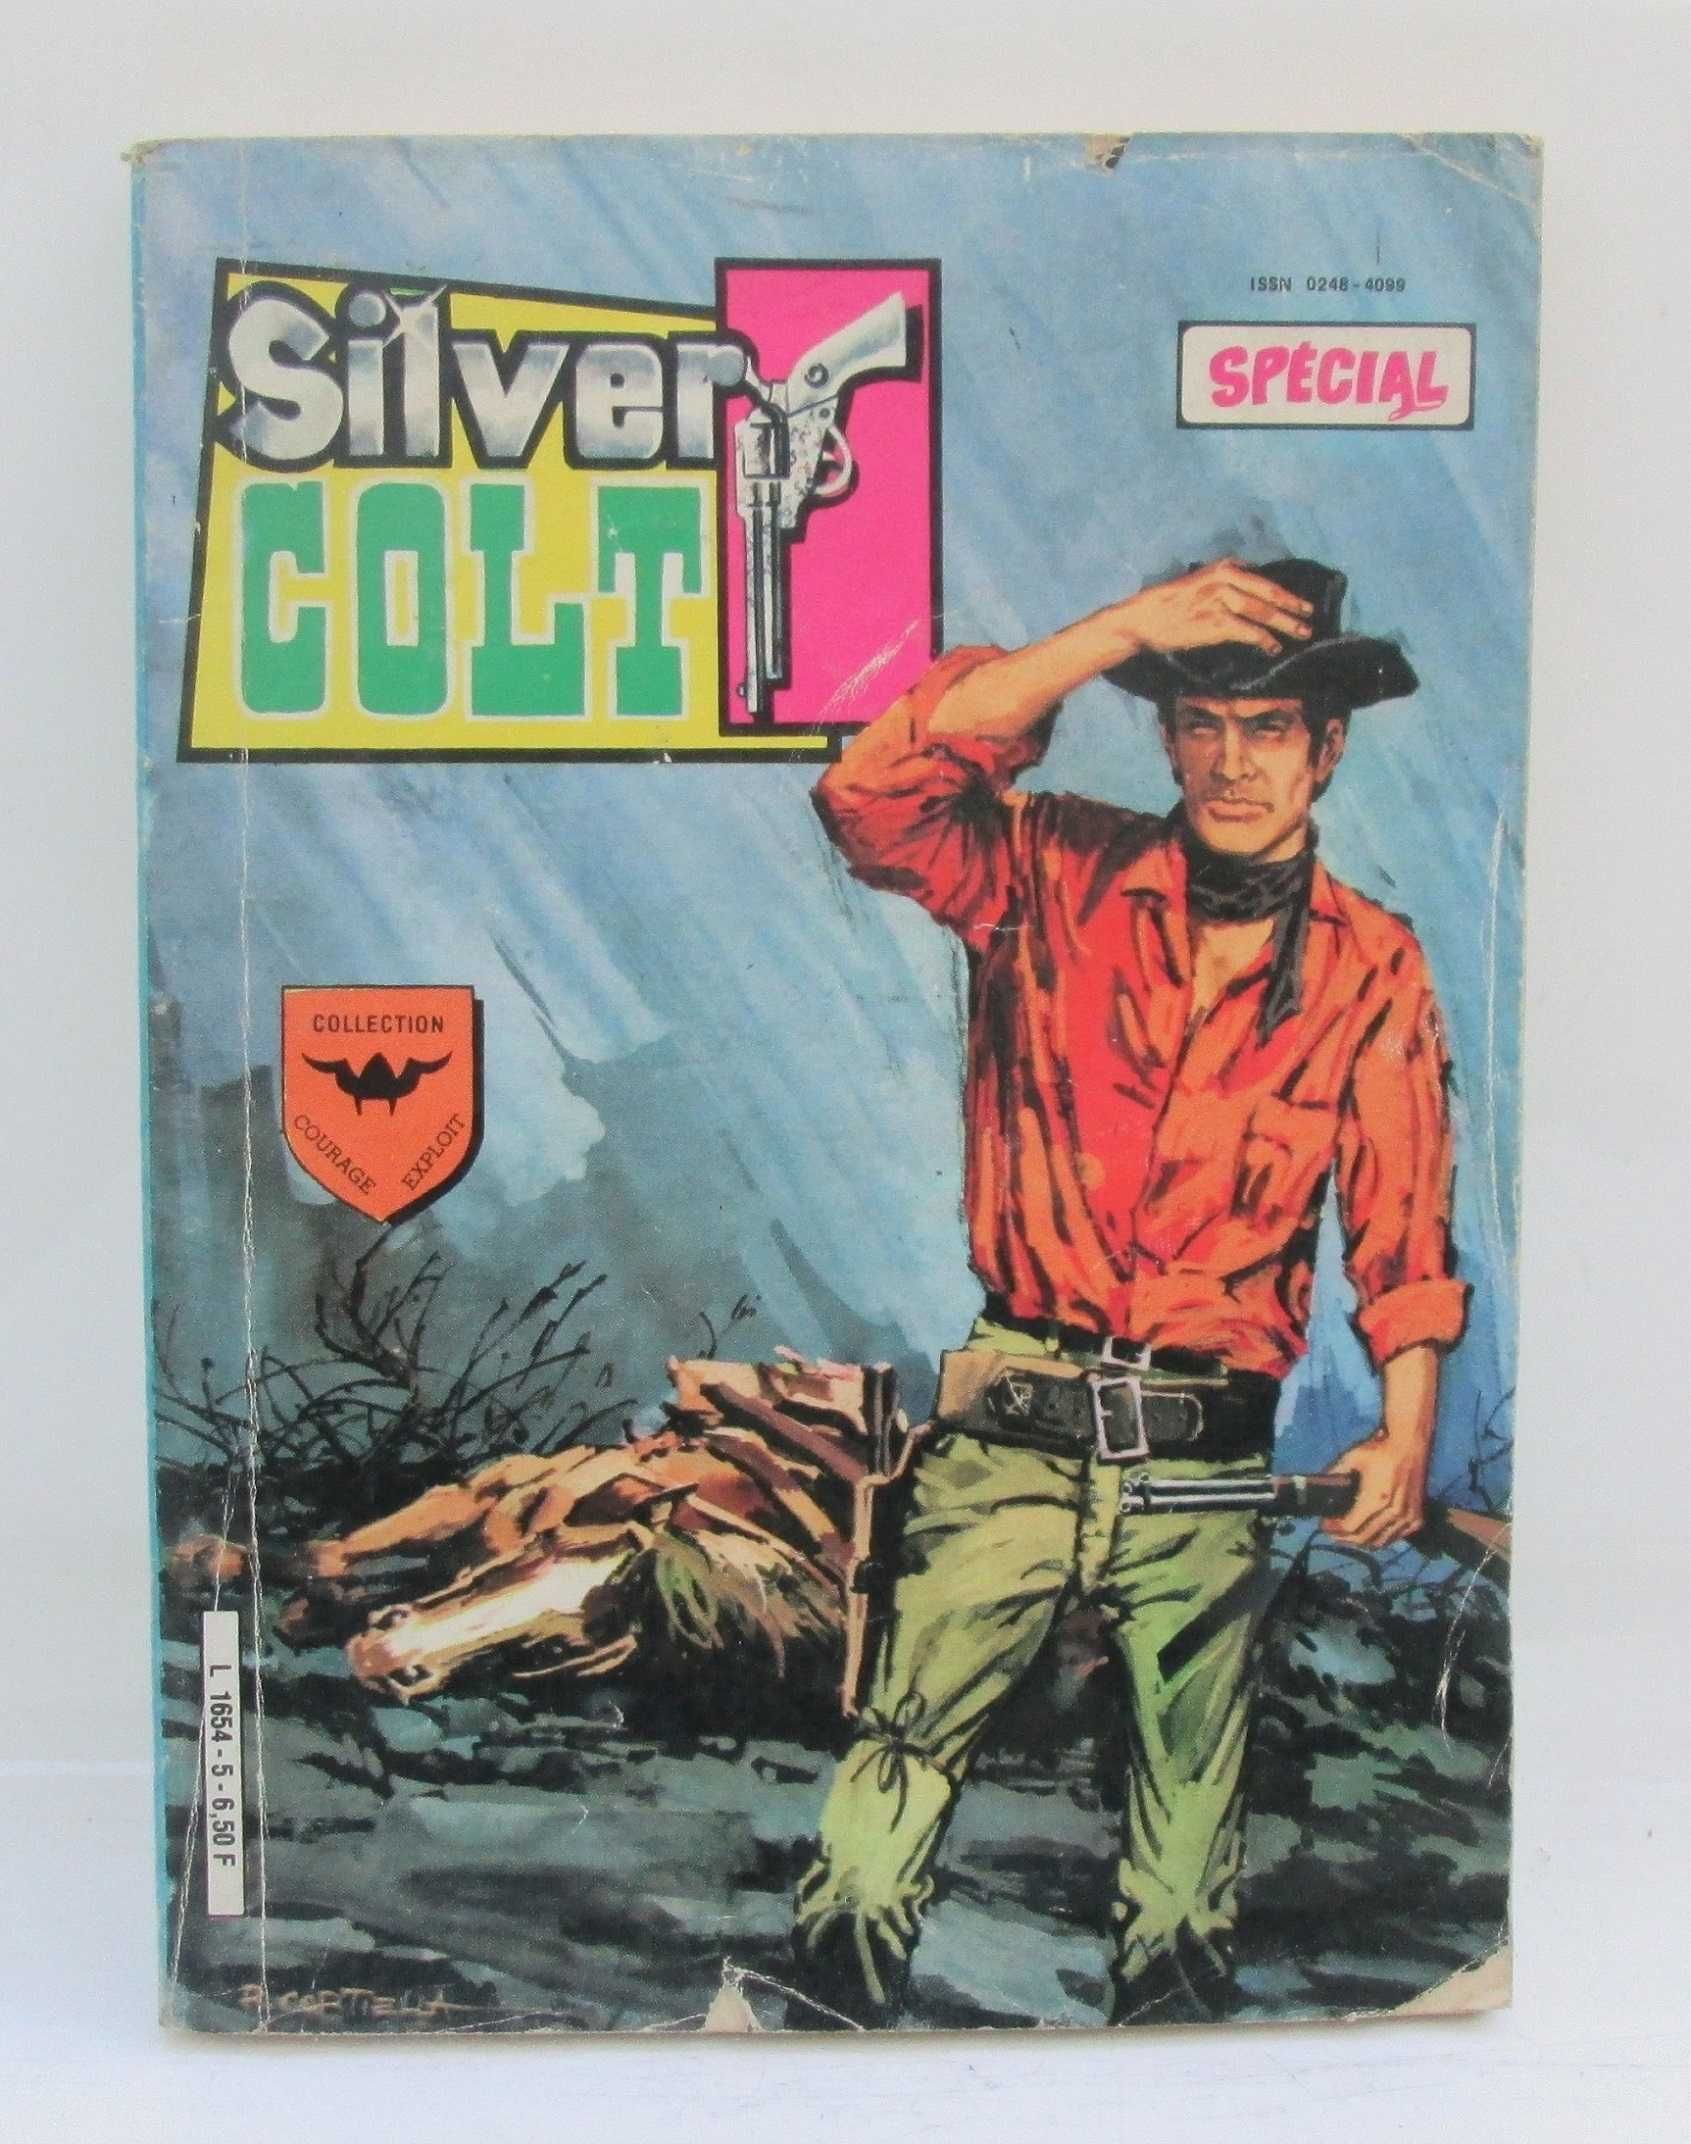 Livro BD Silver colt spécial 1985